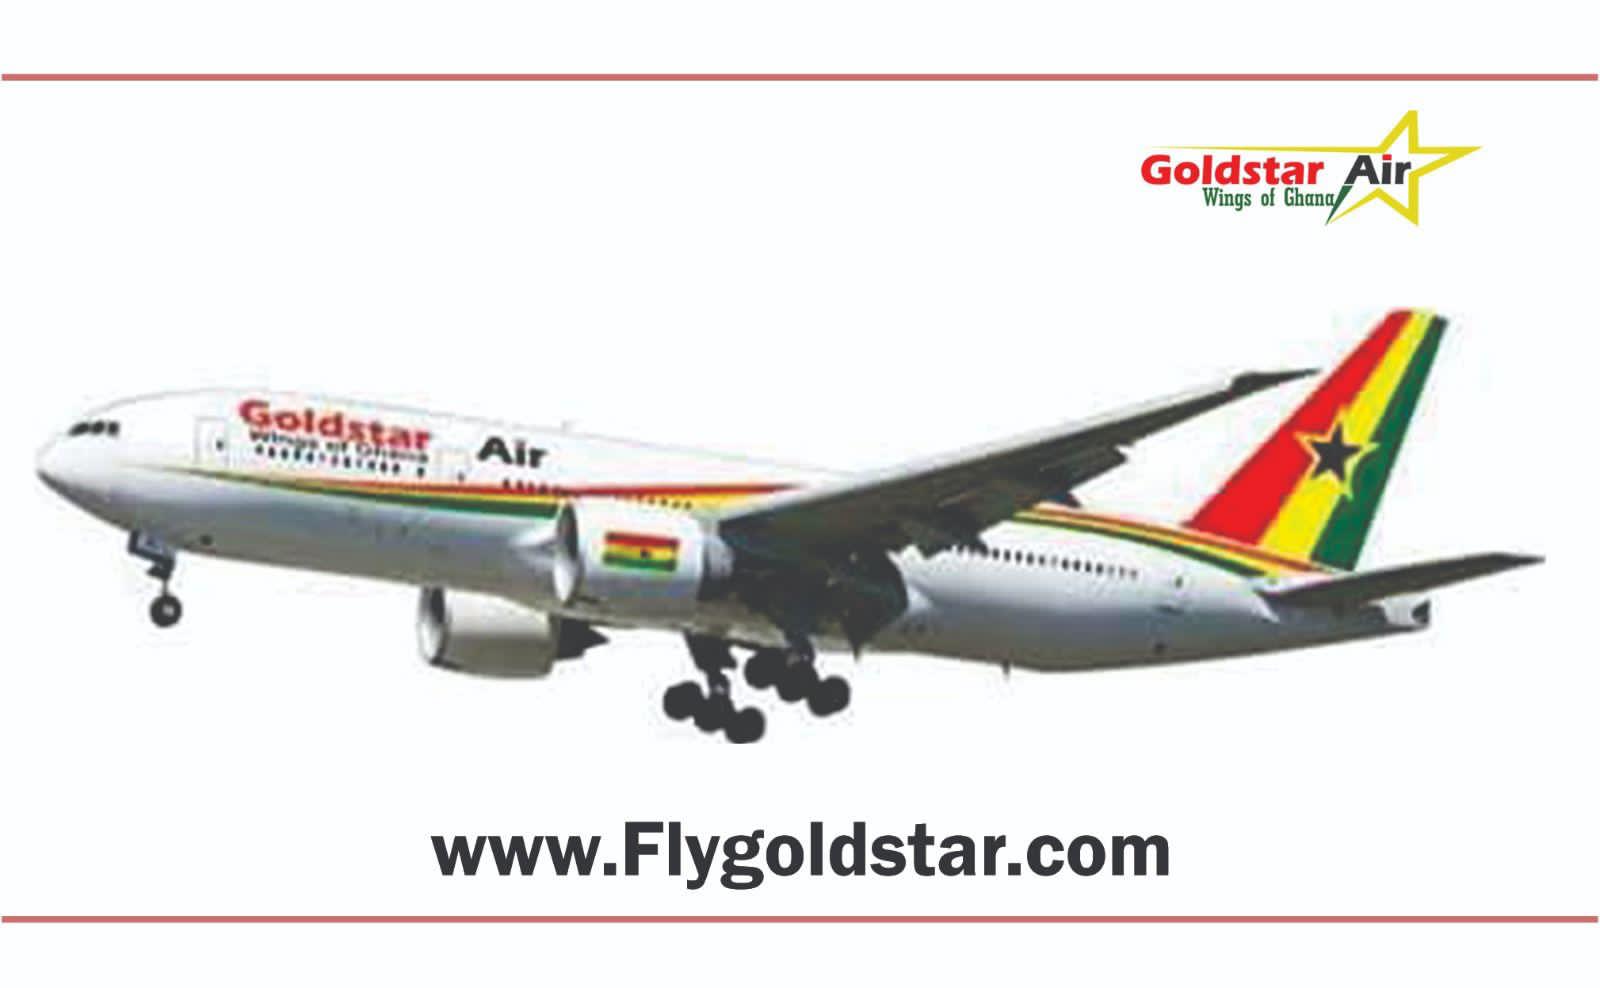 Goldstar Air to boost Ghana’s GDP growth